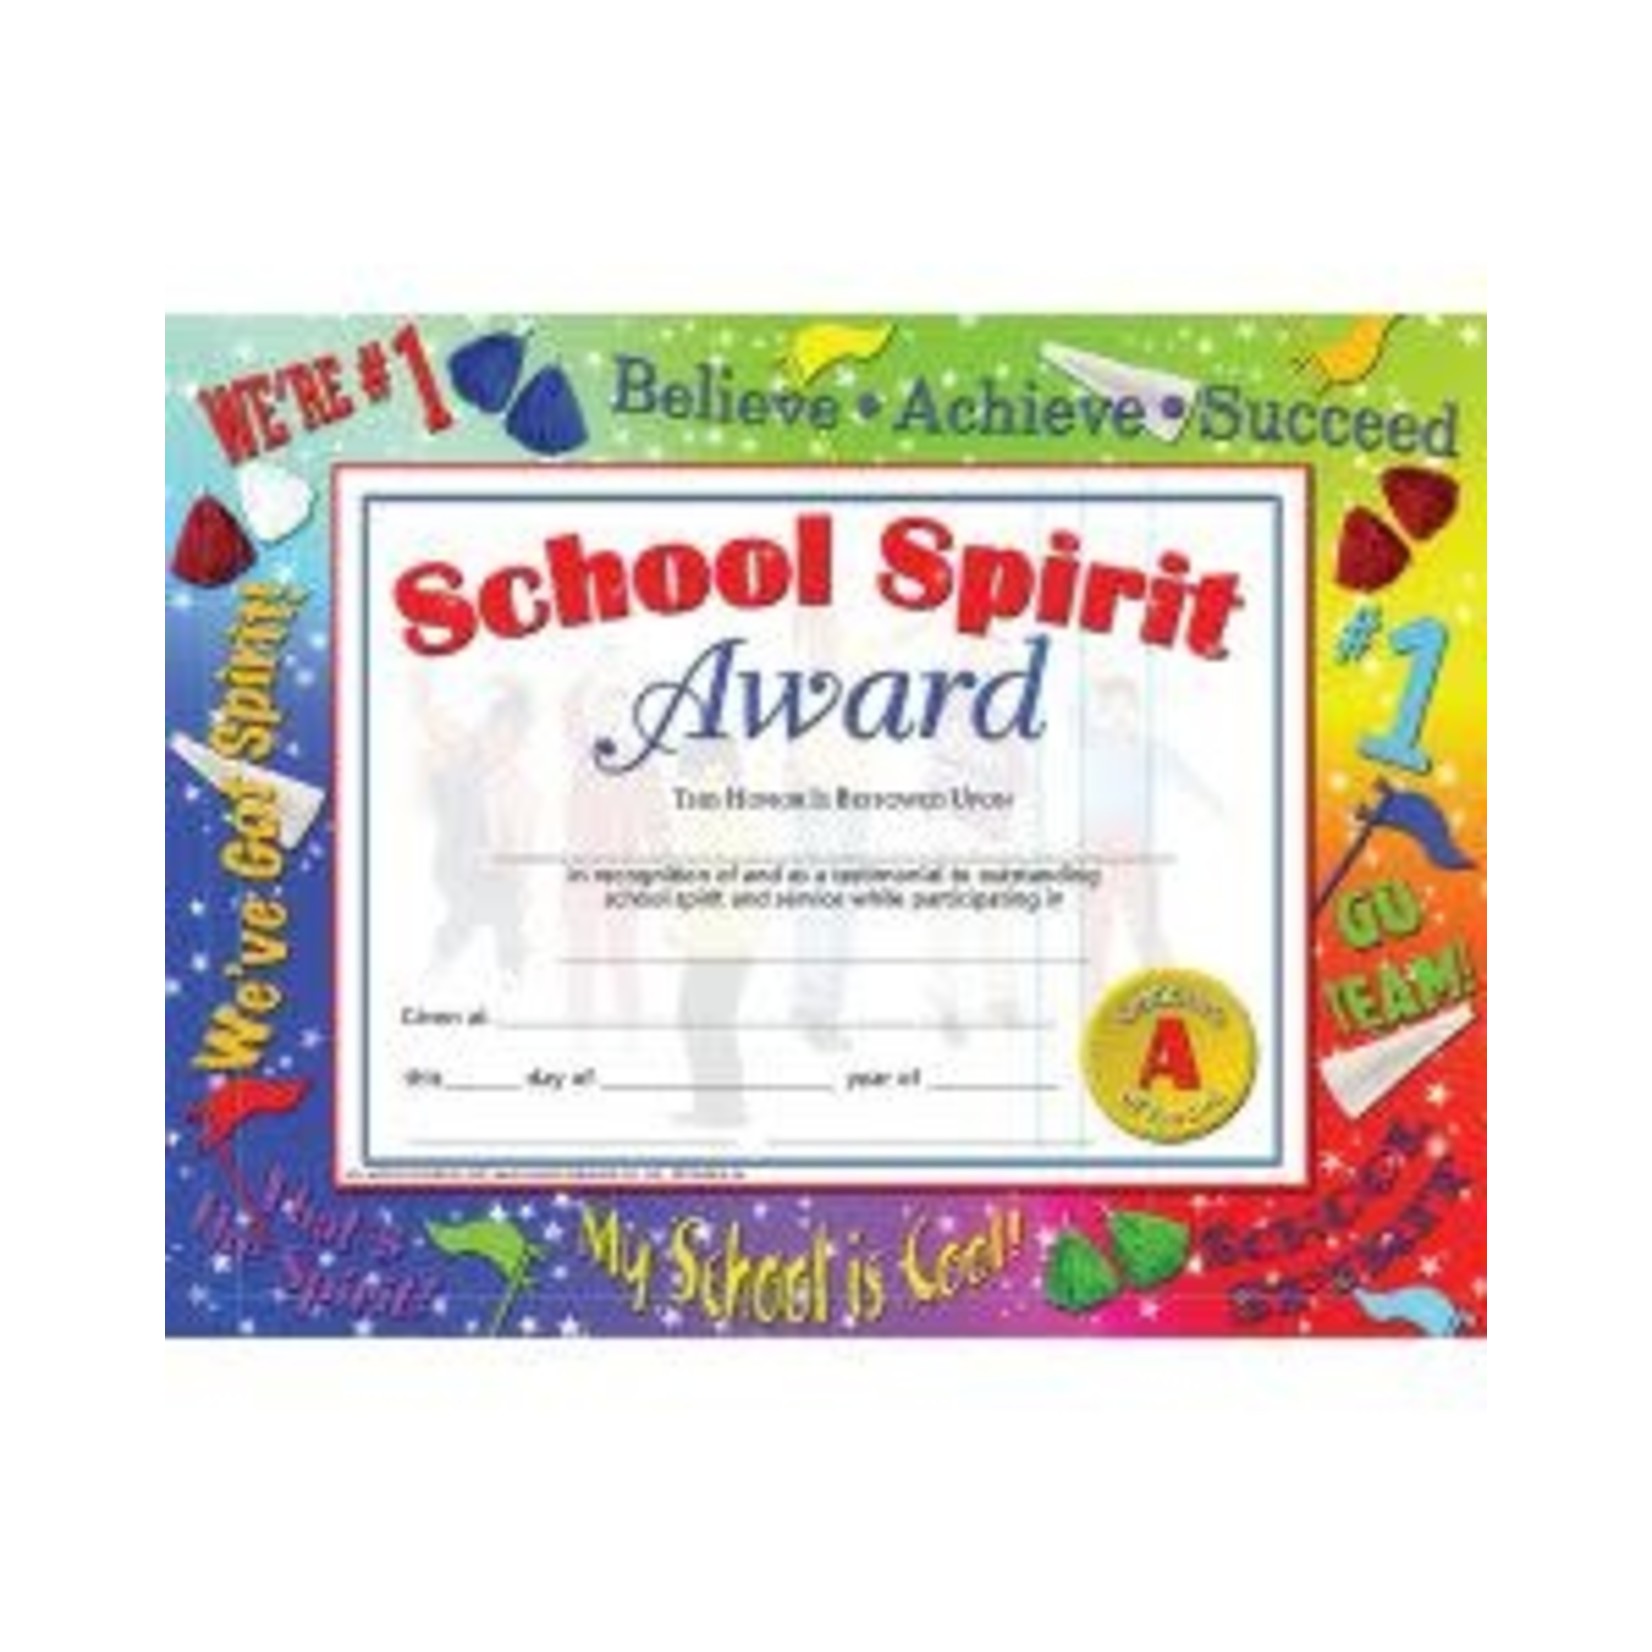 School Spirit Award Certificate, 8.5" x 11" - Pack of 30